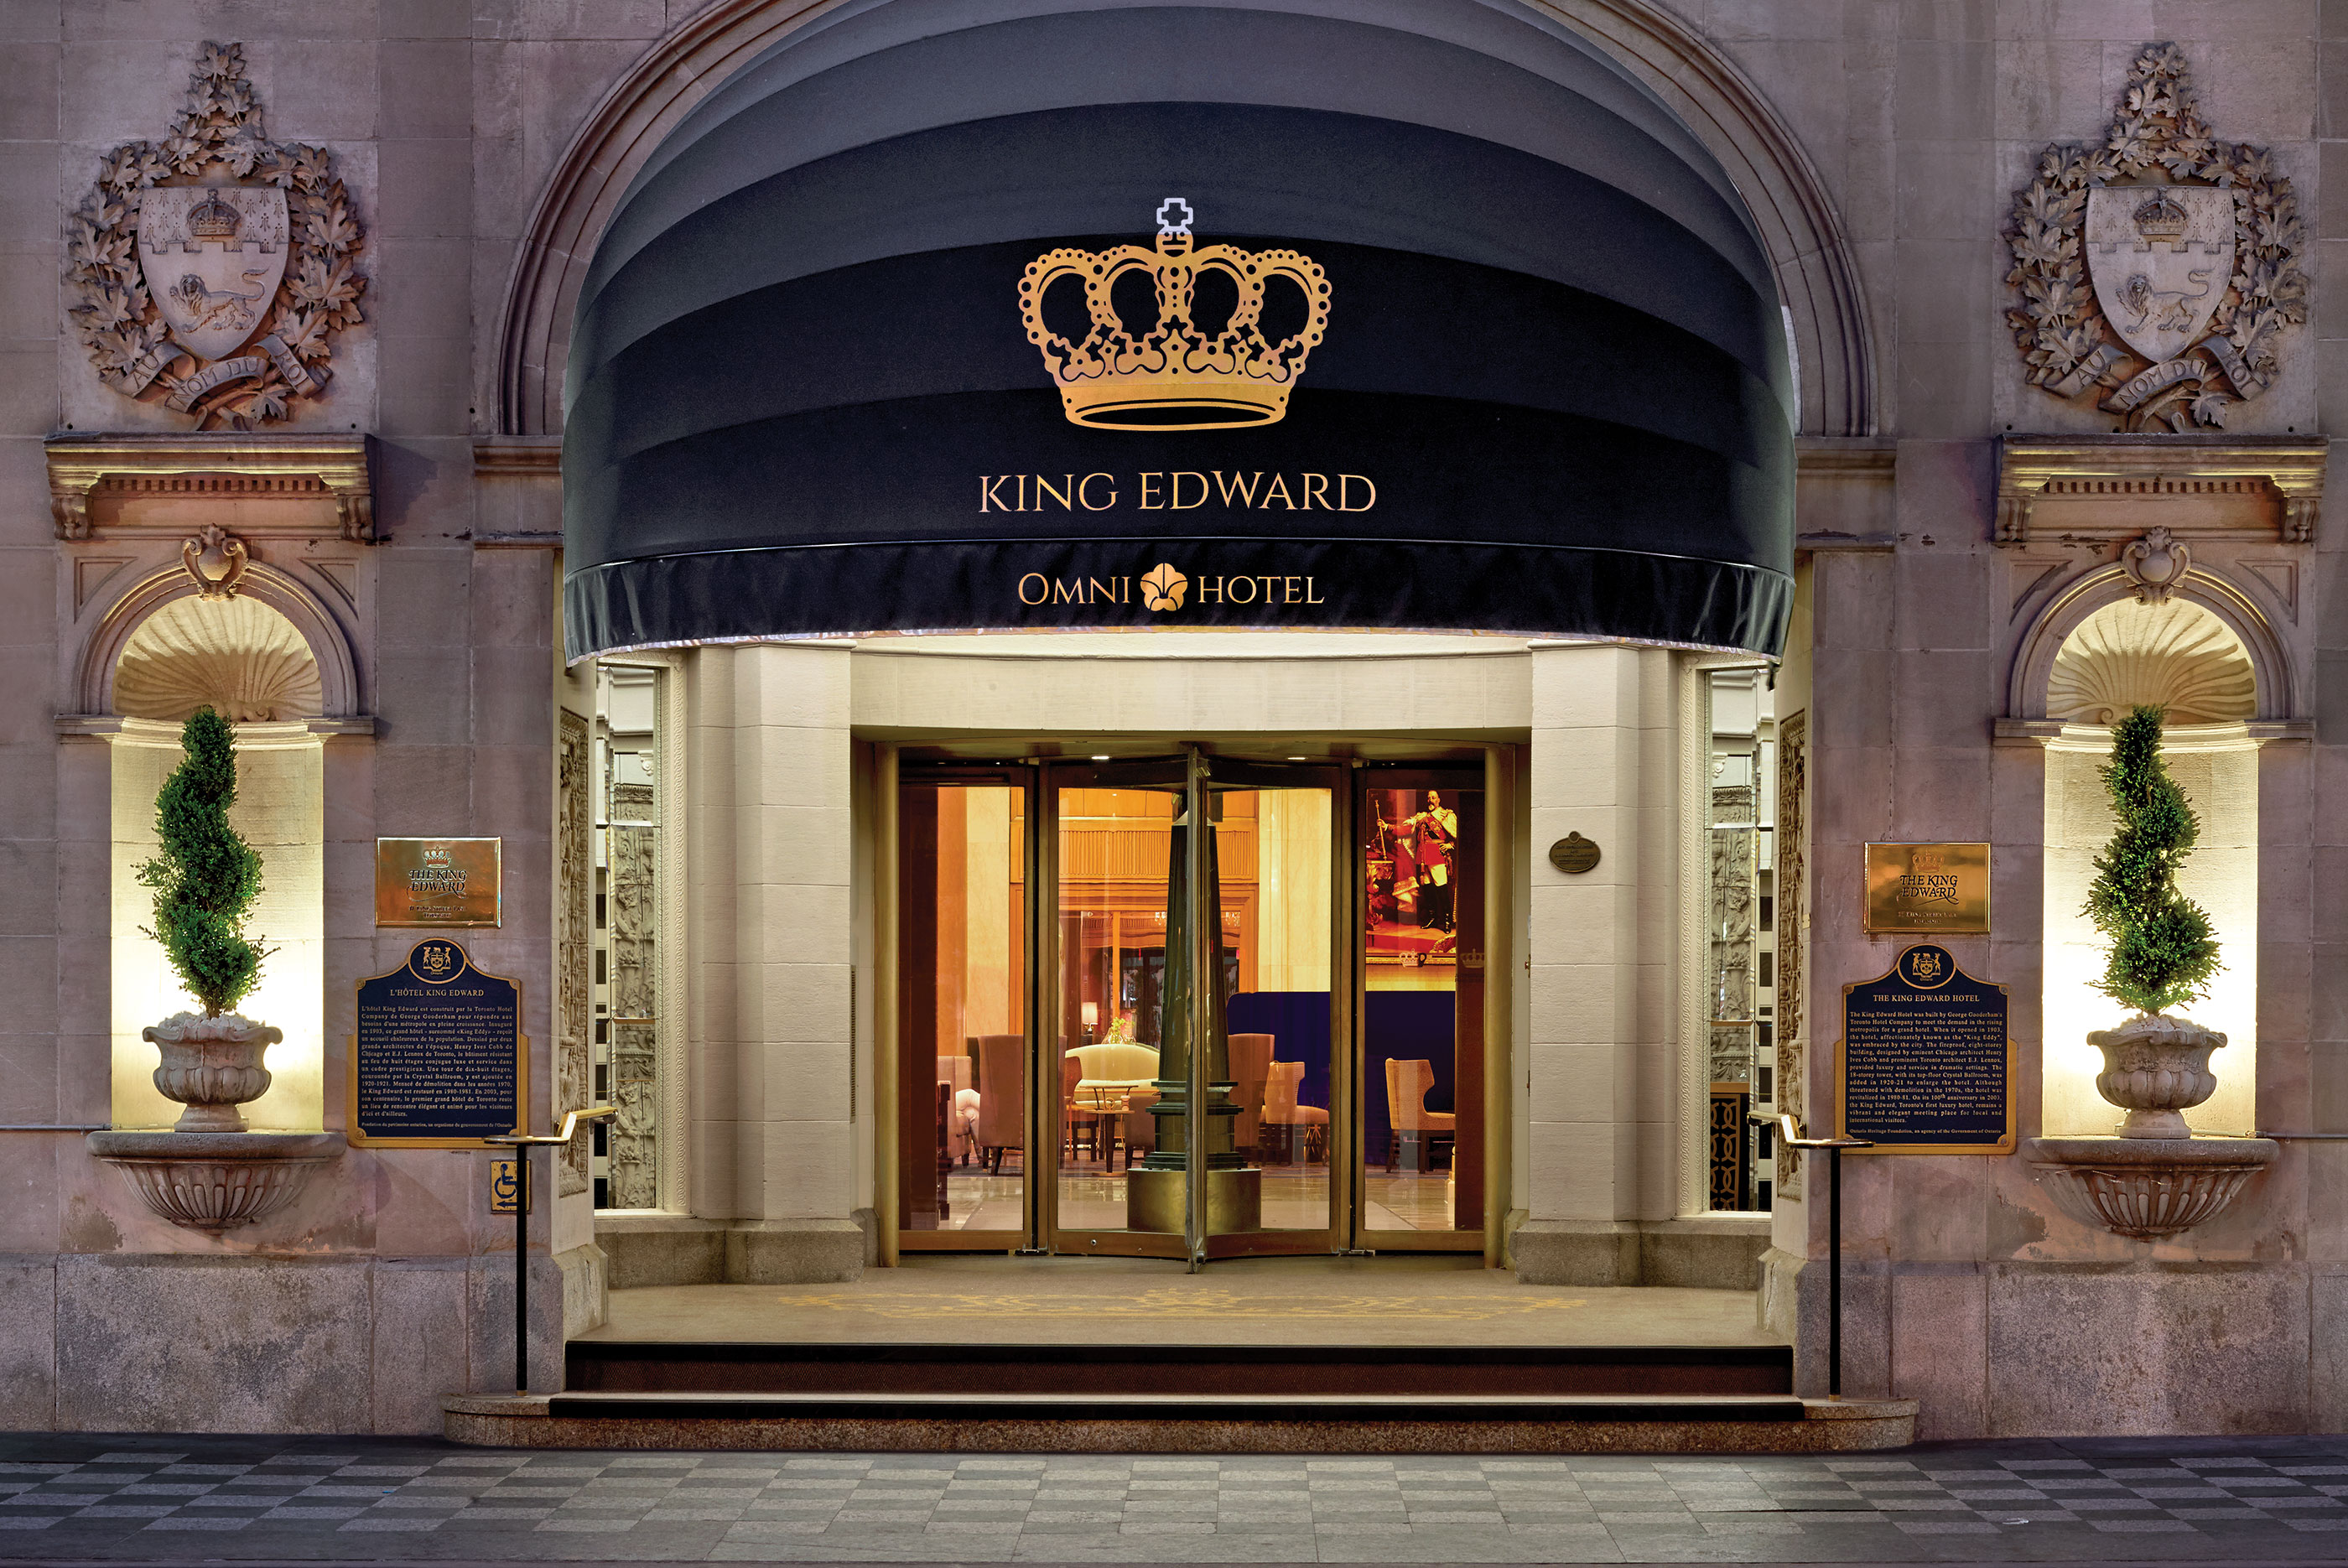 Downtown Toronto Hotels The Omni King Edward Hotel - 